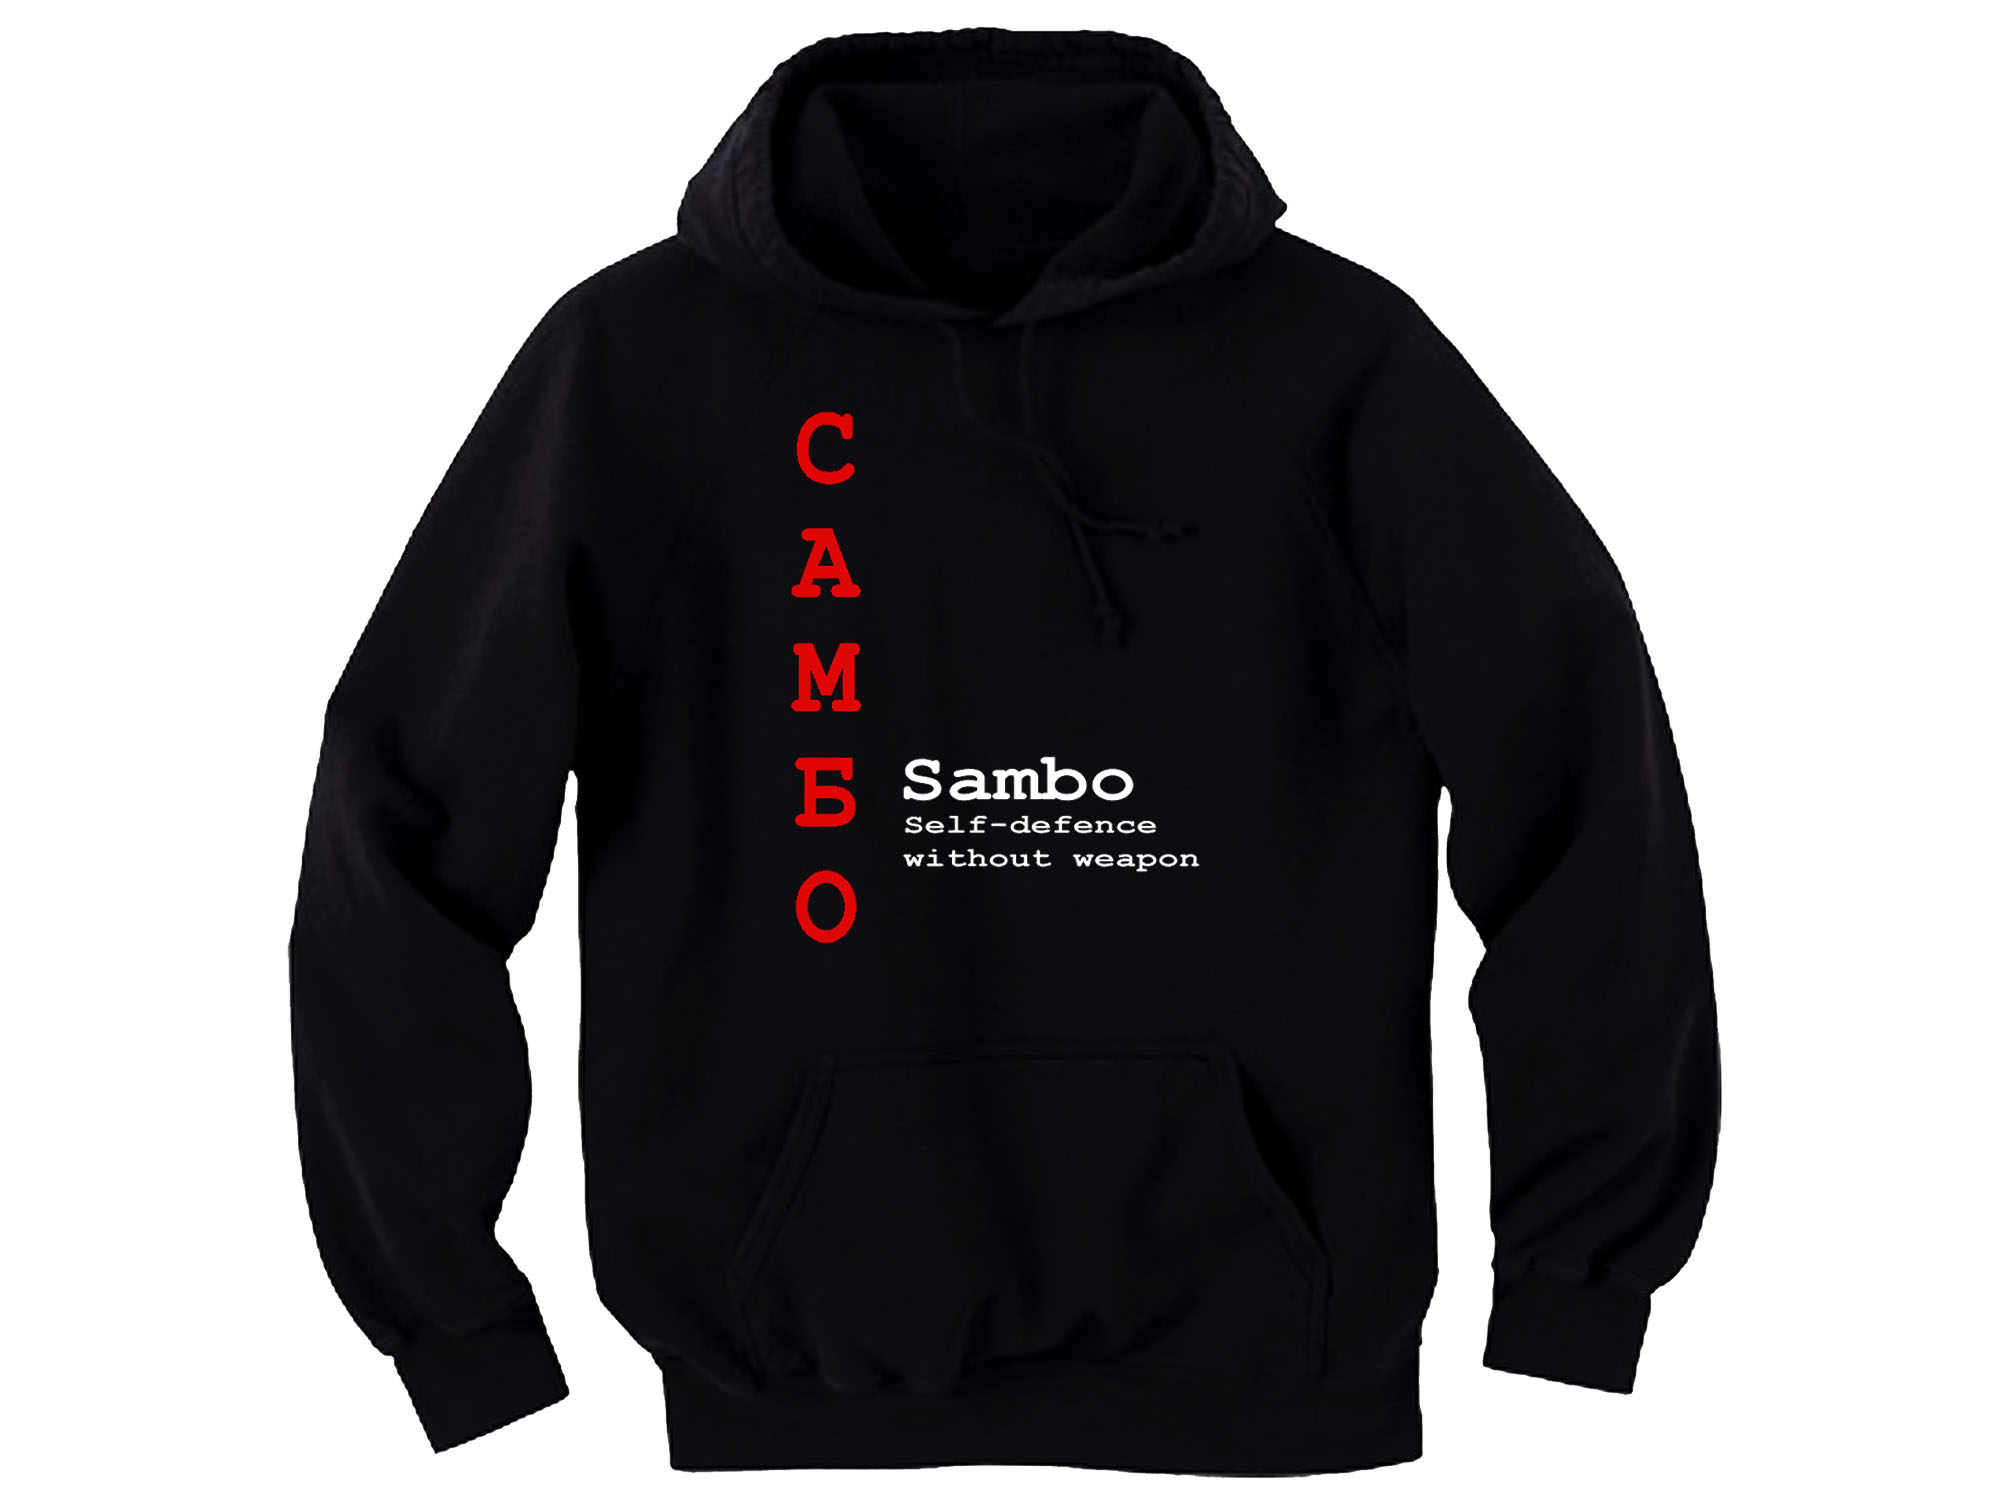 Sambo Russian/English script martial arts cambo hoodie